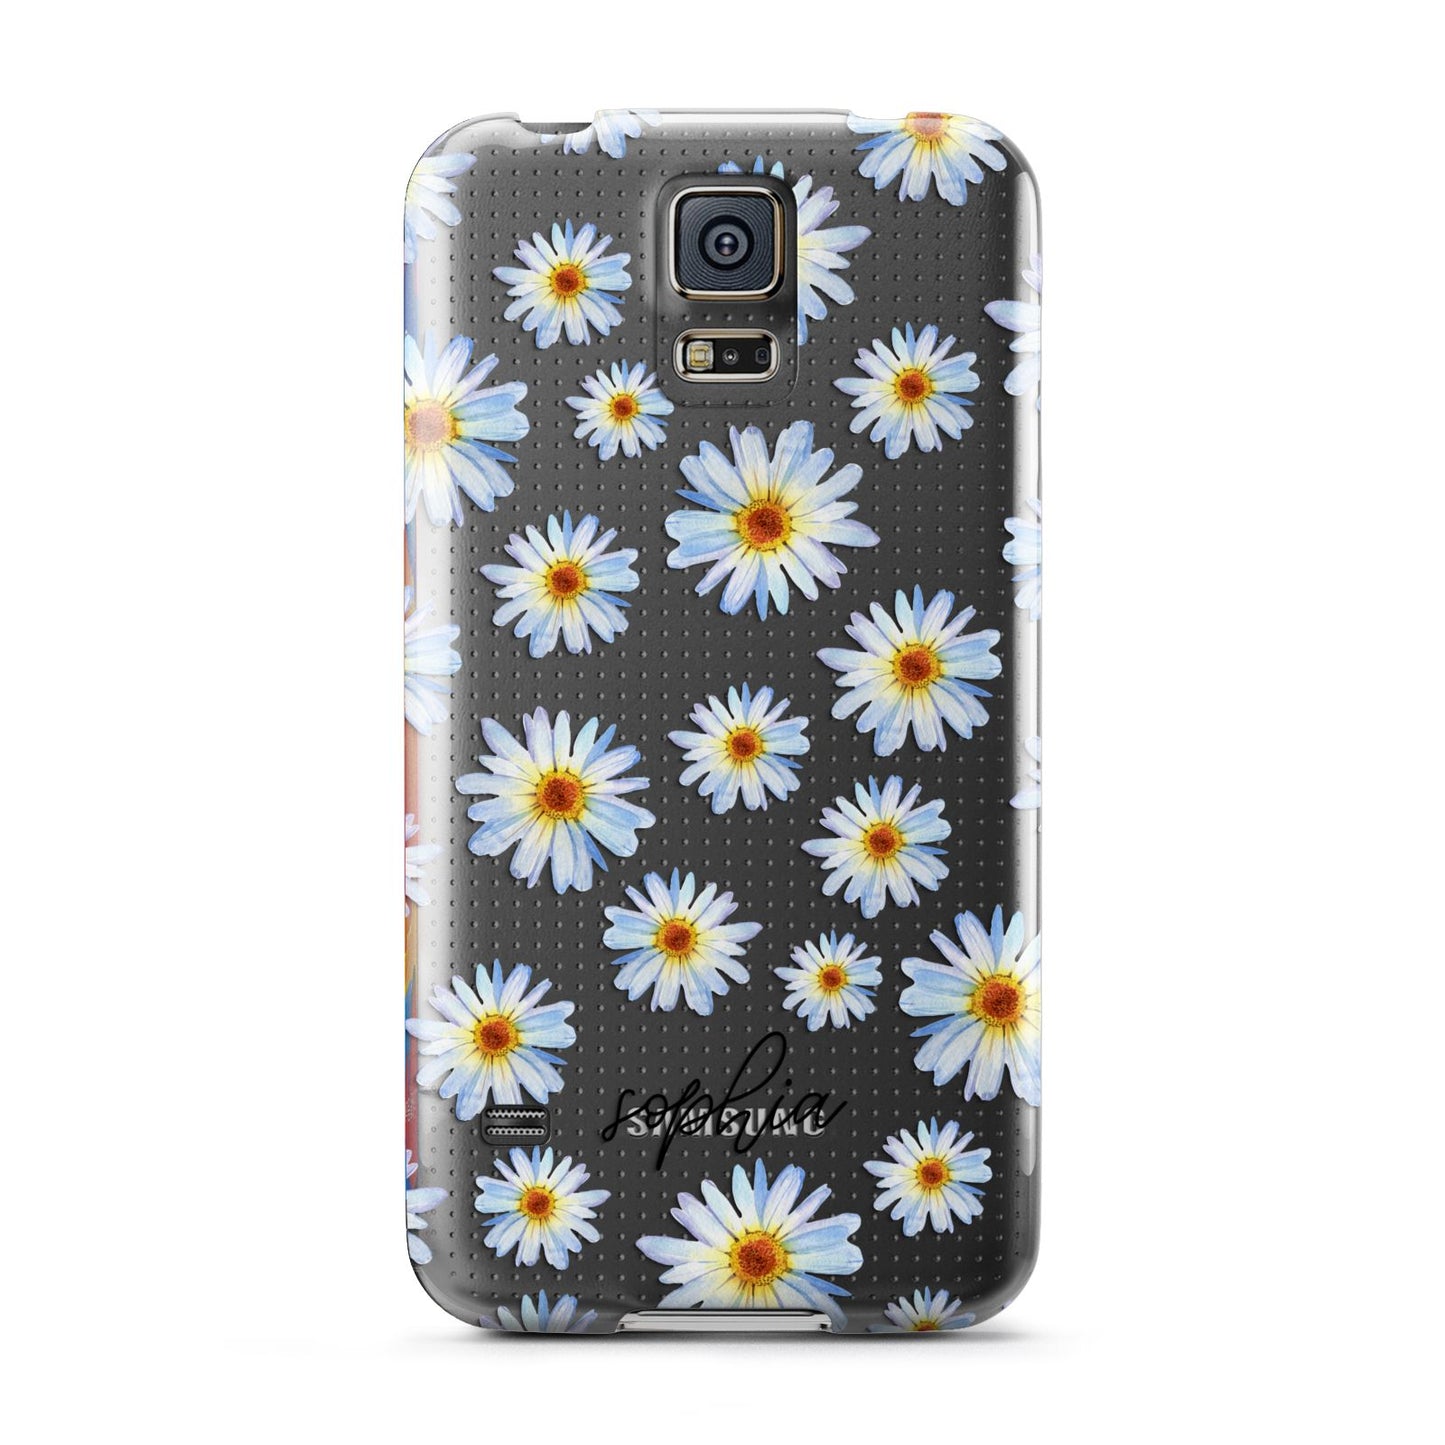 Personalised Daisy Samsung Galaxy S5 Case